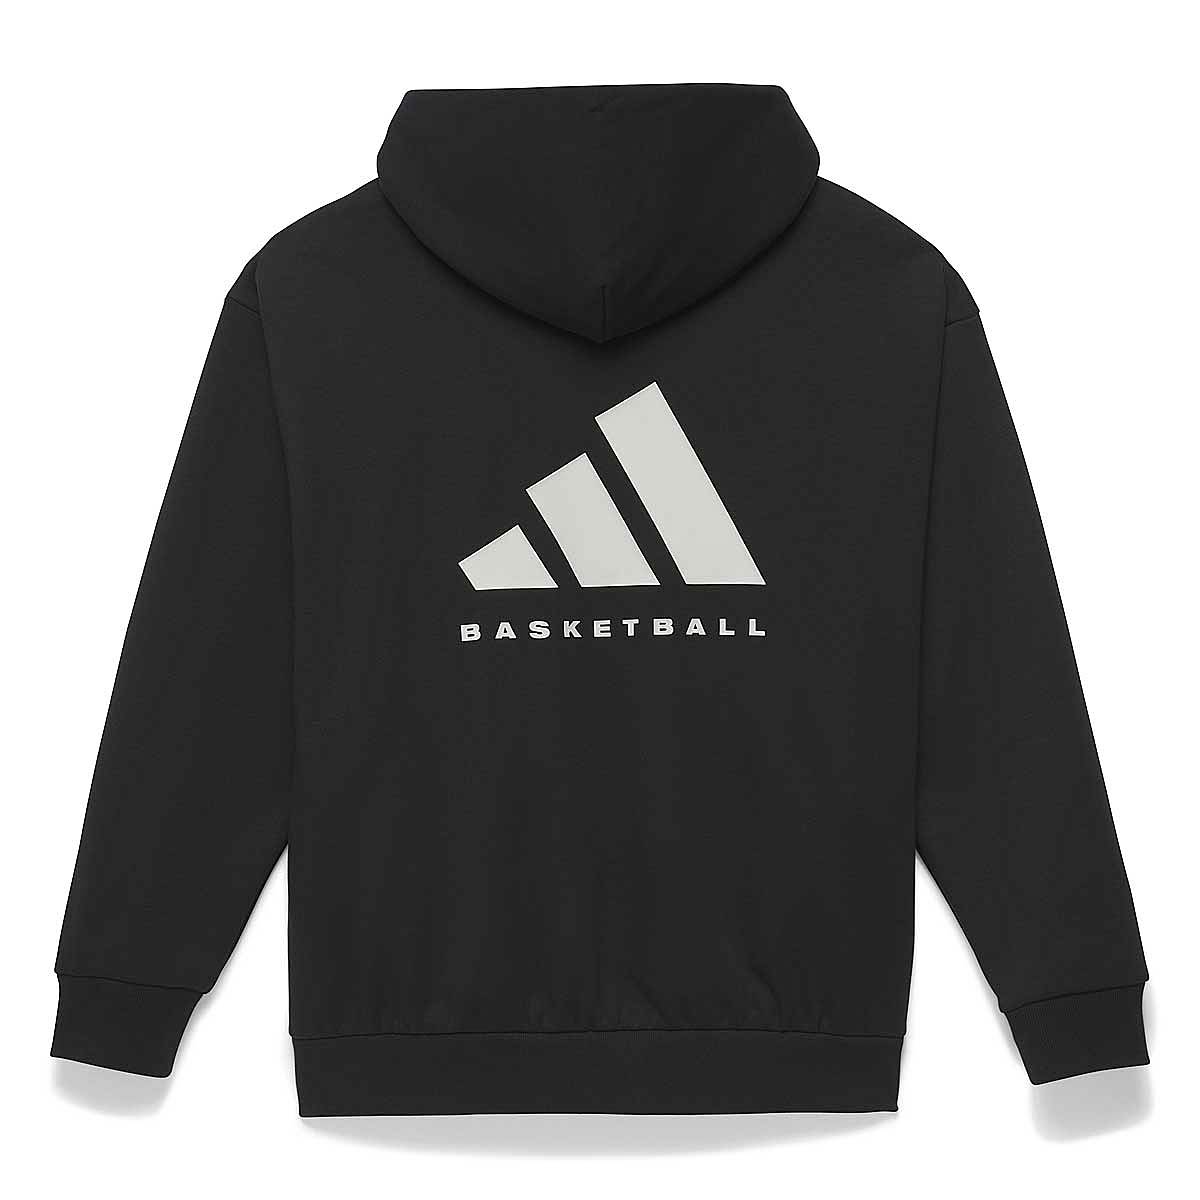 Image of Adidas Chapter 3 Basketball Hoody, Black/talc